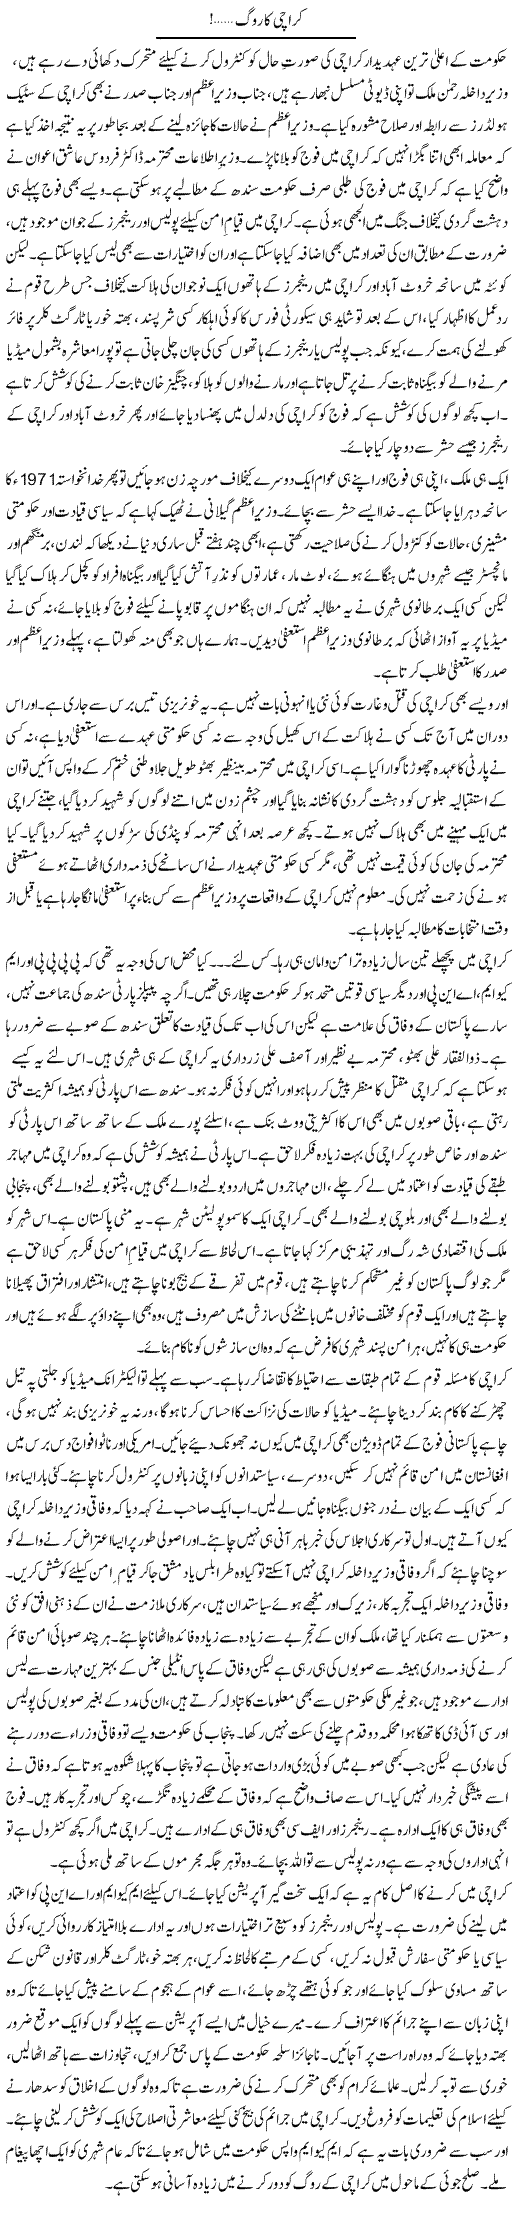 Karachi Problem Express Column Asadullah Ghalib 28 August 2011